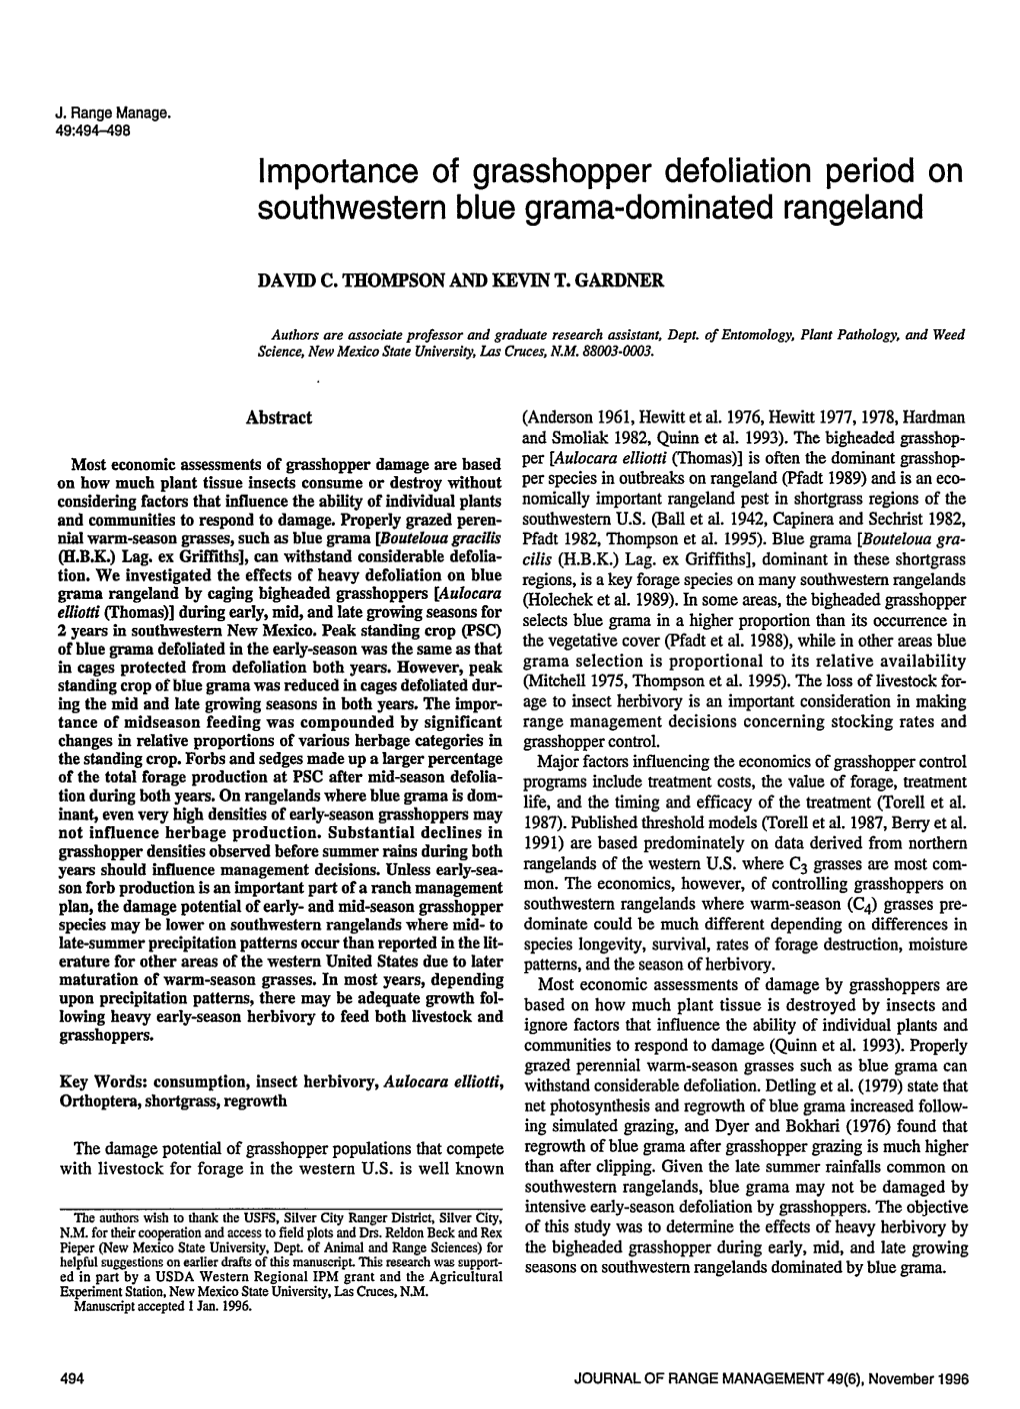 Importance of Grasshopper Defoliation Period on Southwestern Blue Grama-Dominated Rangeland